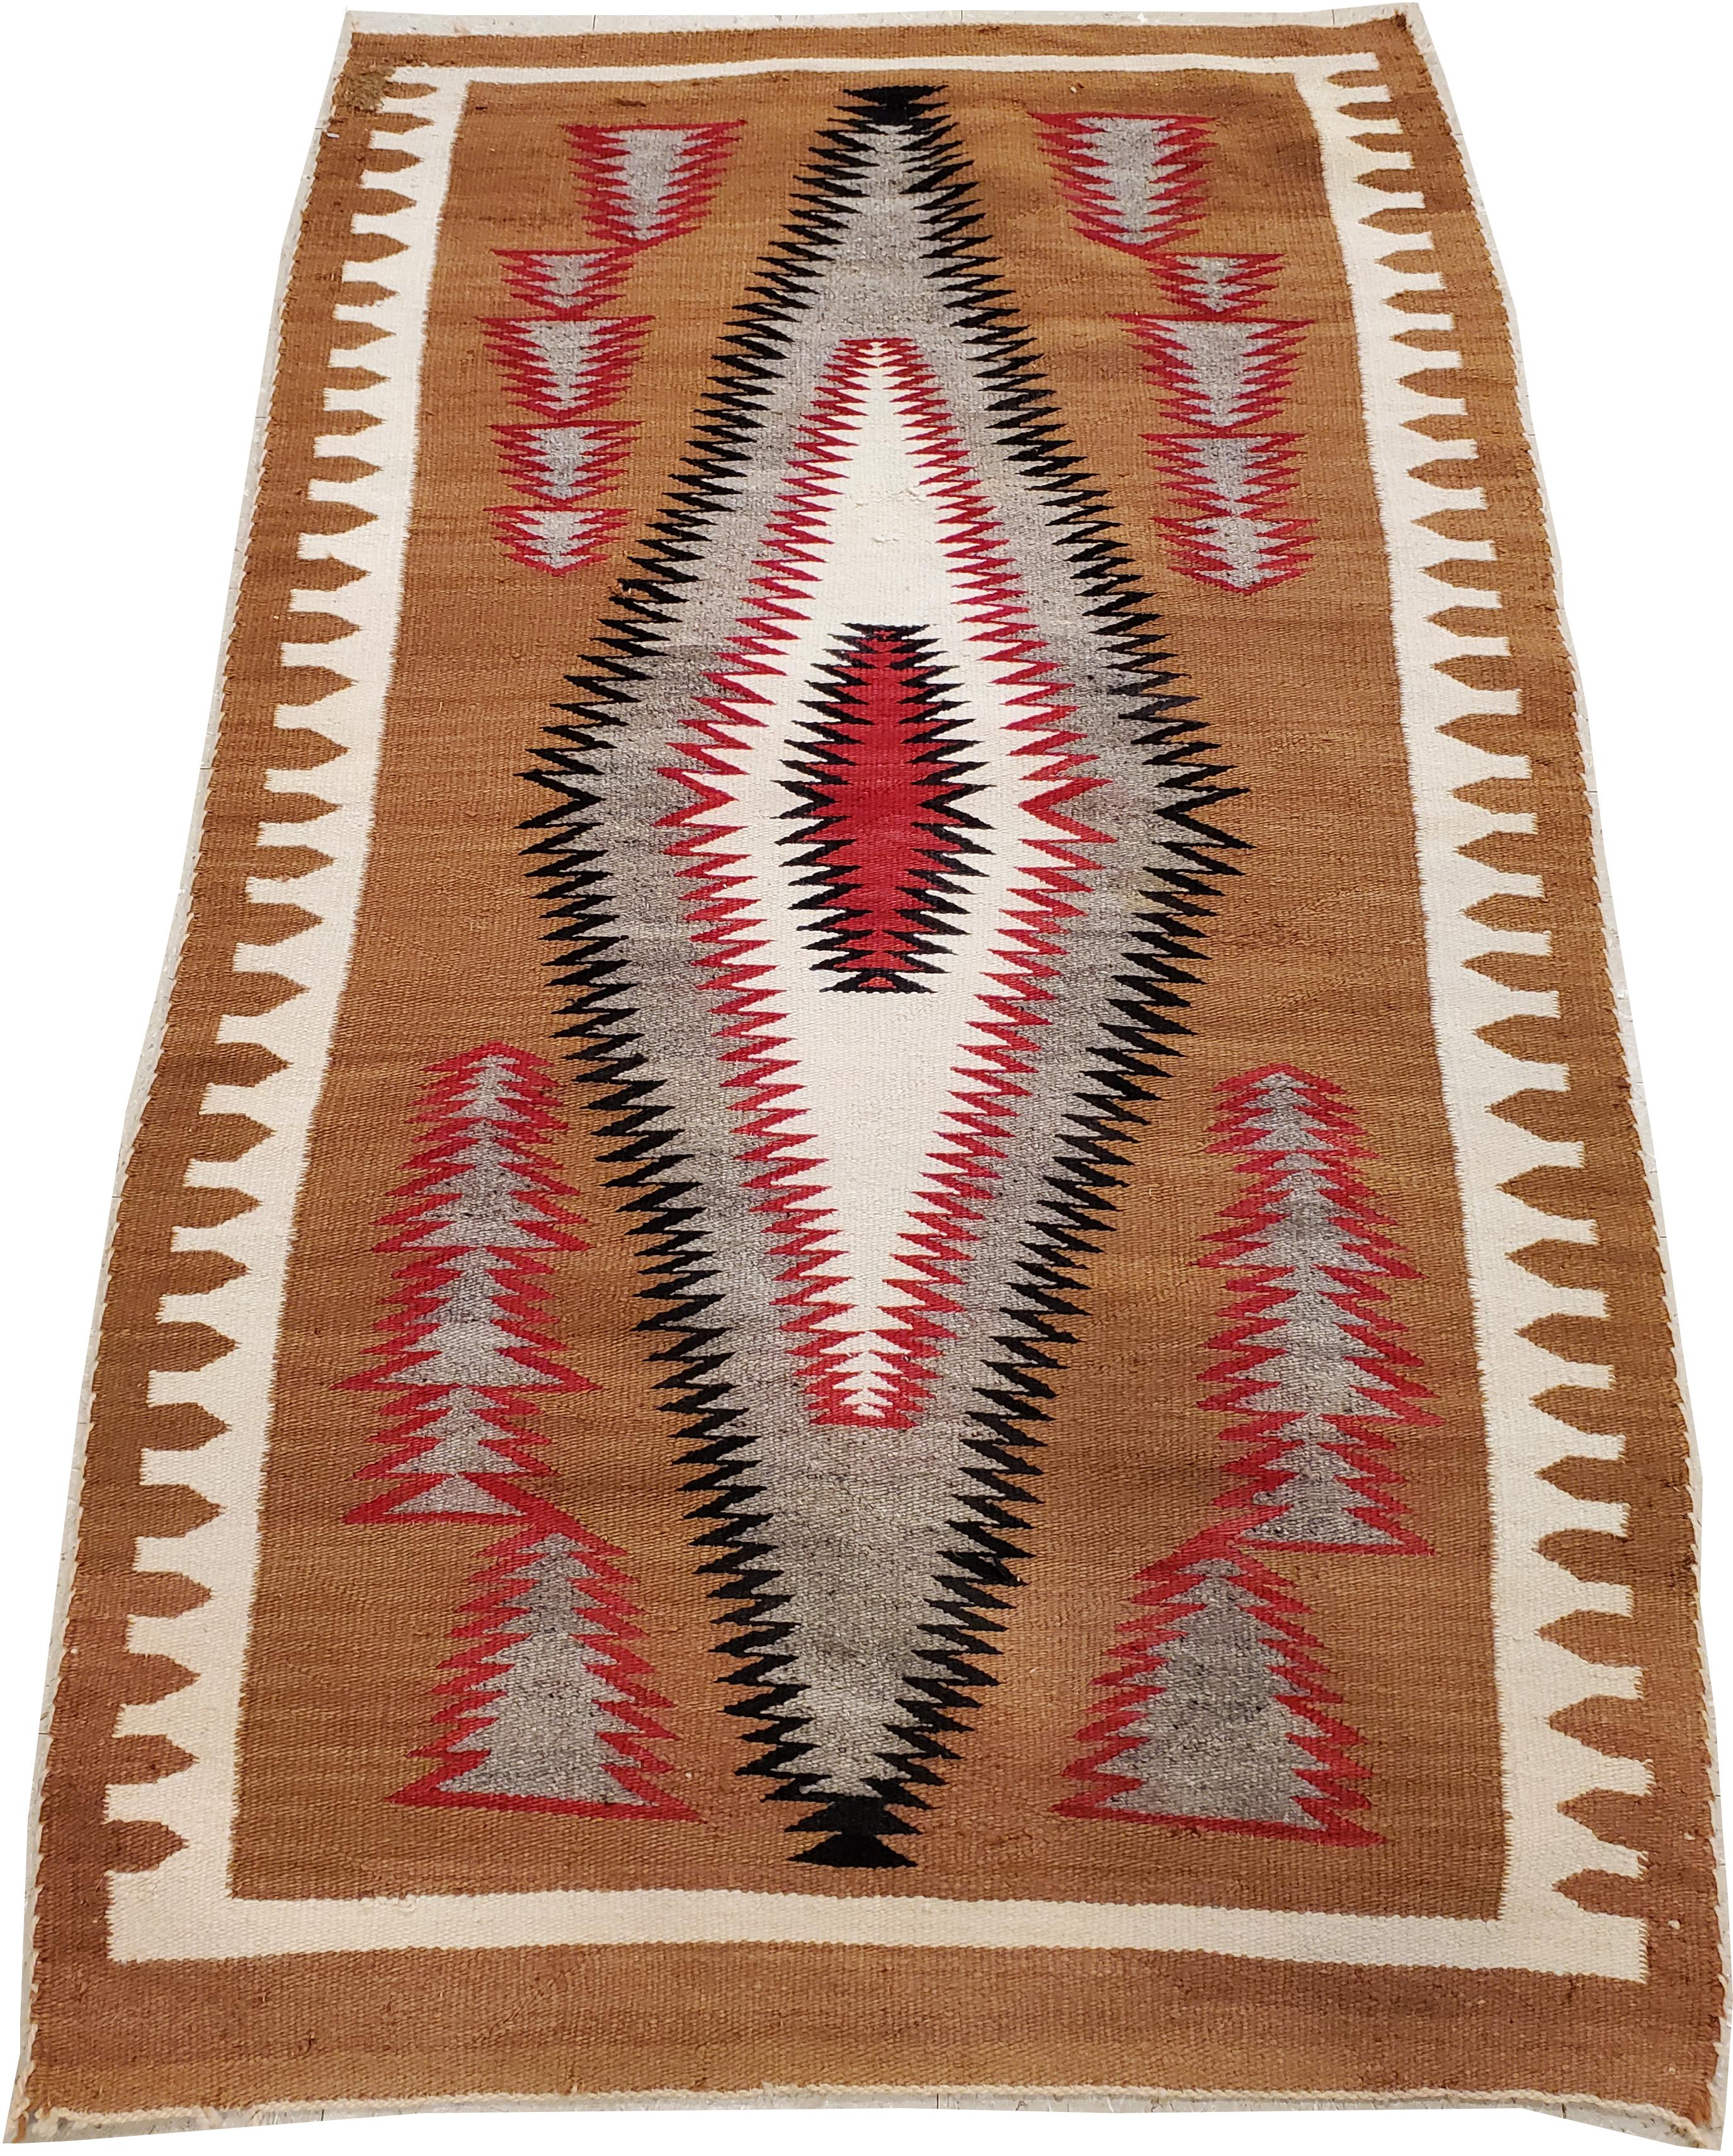 Antique Navajo Carpet, Storm Pattern Rug, Handmade Wool Rug, Gray, Red and Tan 1